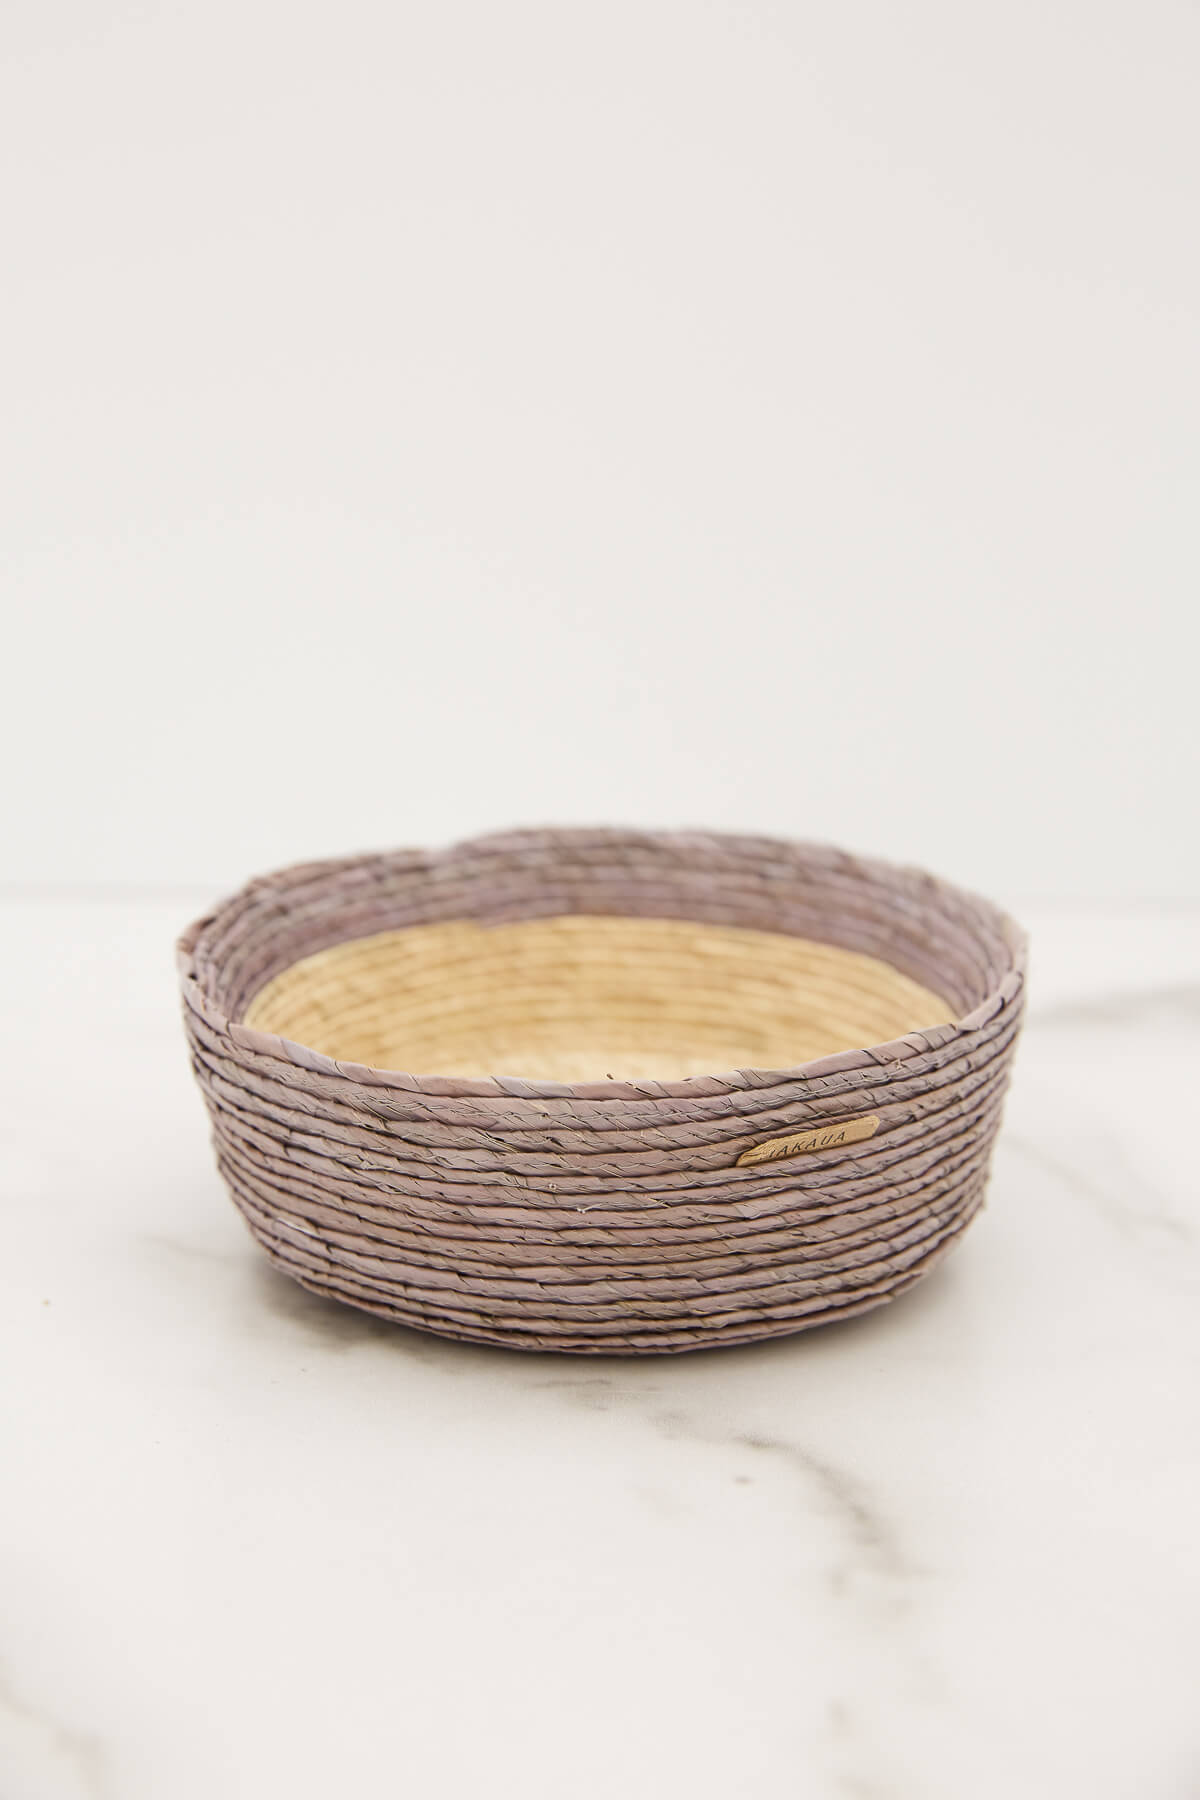 Makaua Small Round Basket